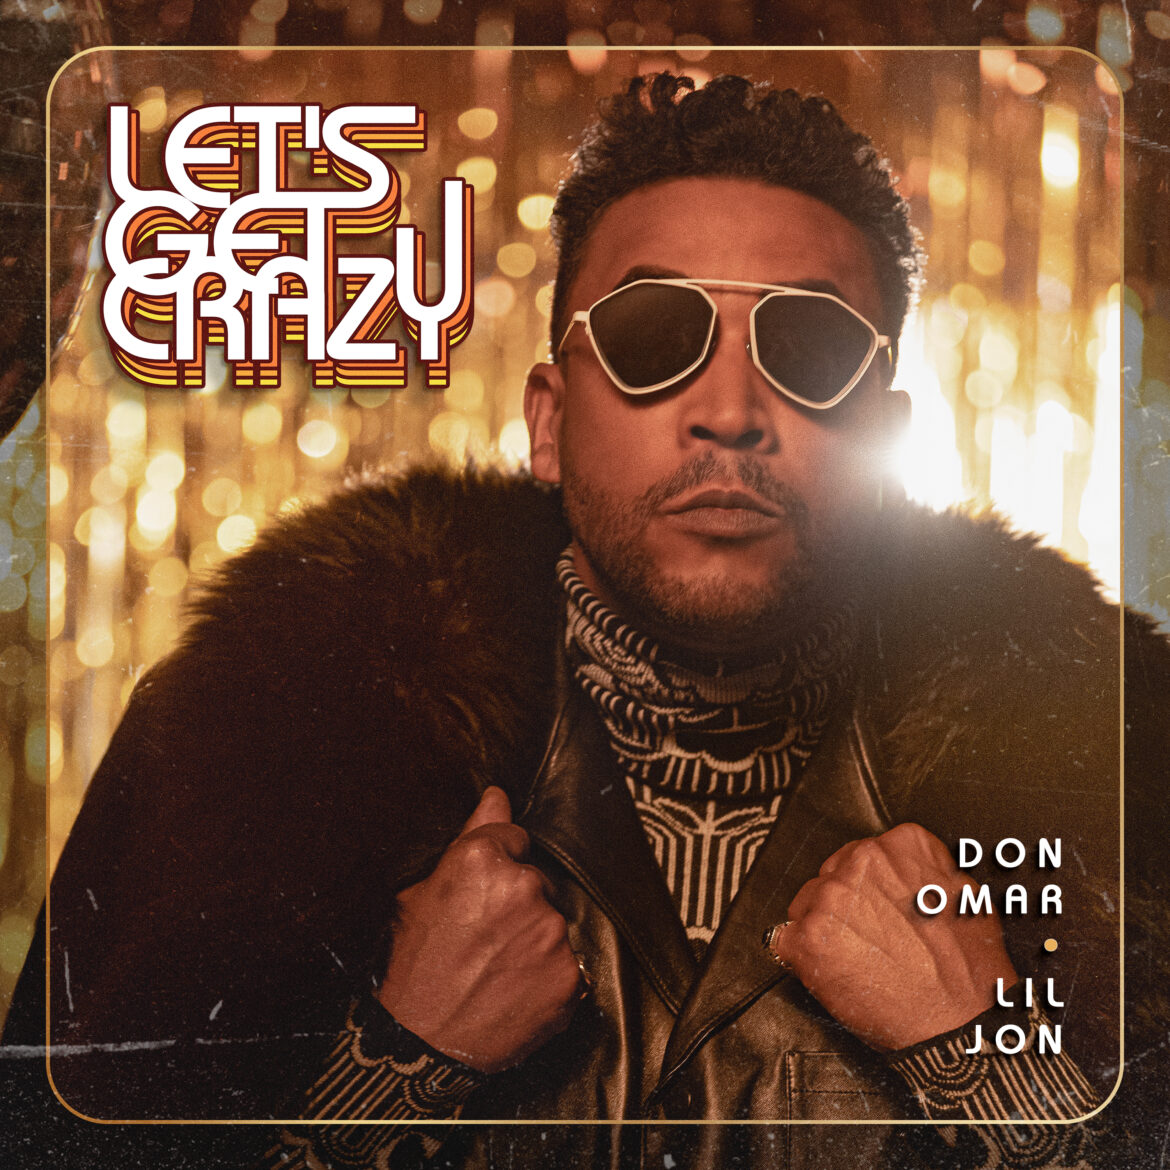 Don Omar se une a Lil Jon en “Let’s Get Crazy”